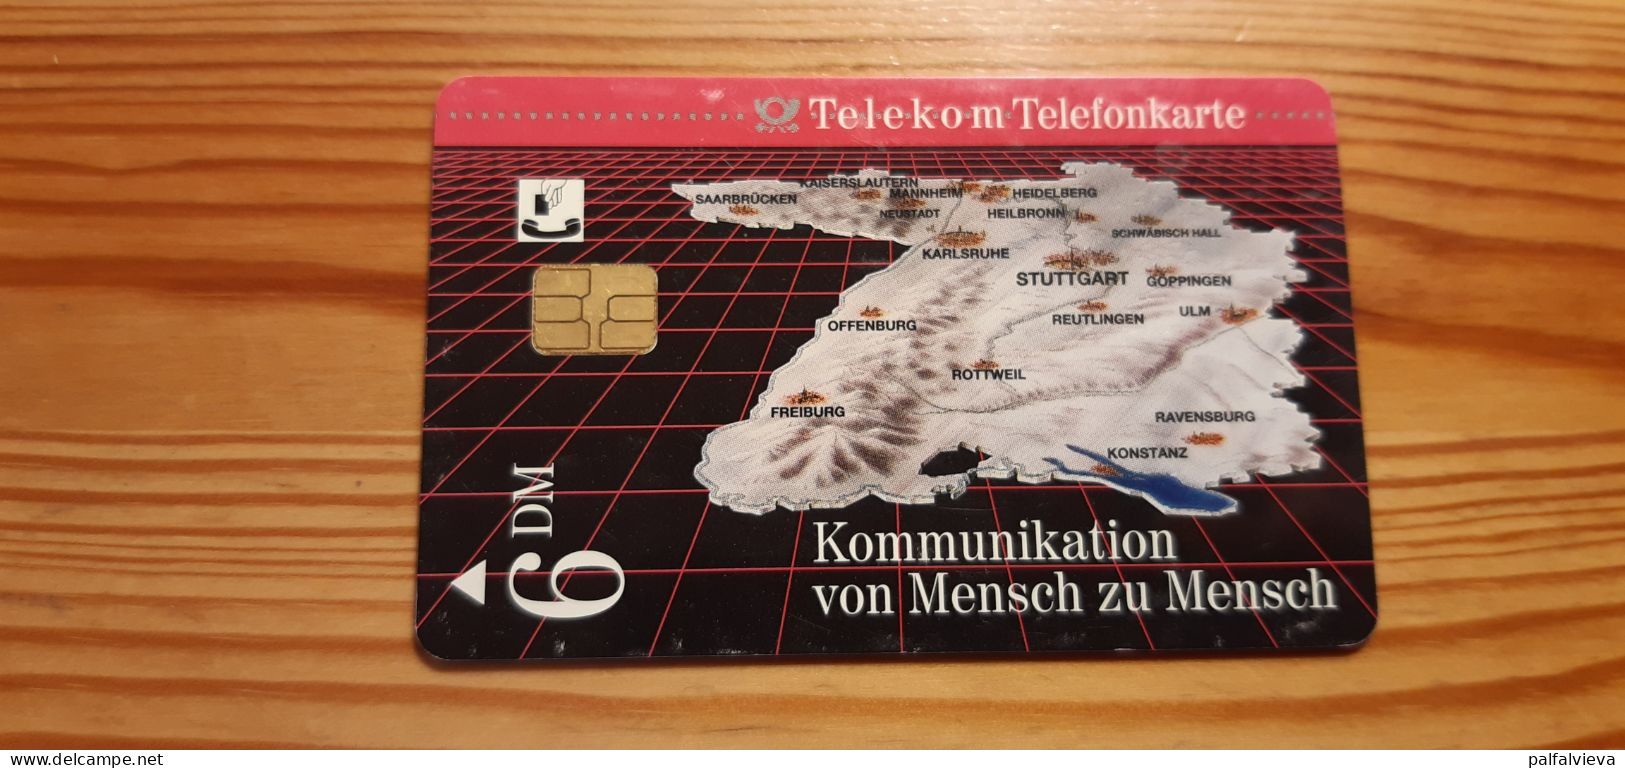 Phonecard Germany A 20 06.94.Direktion Stuttgart 50.000 Ex. - A + AD-Series : D. Telekom AG Advertisement